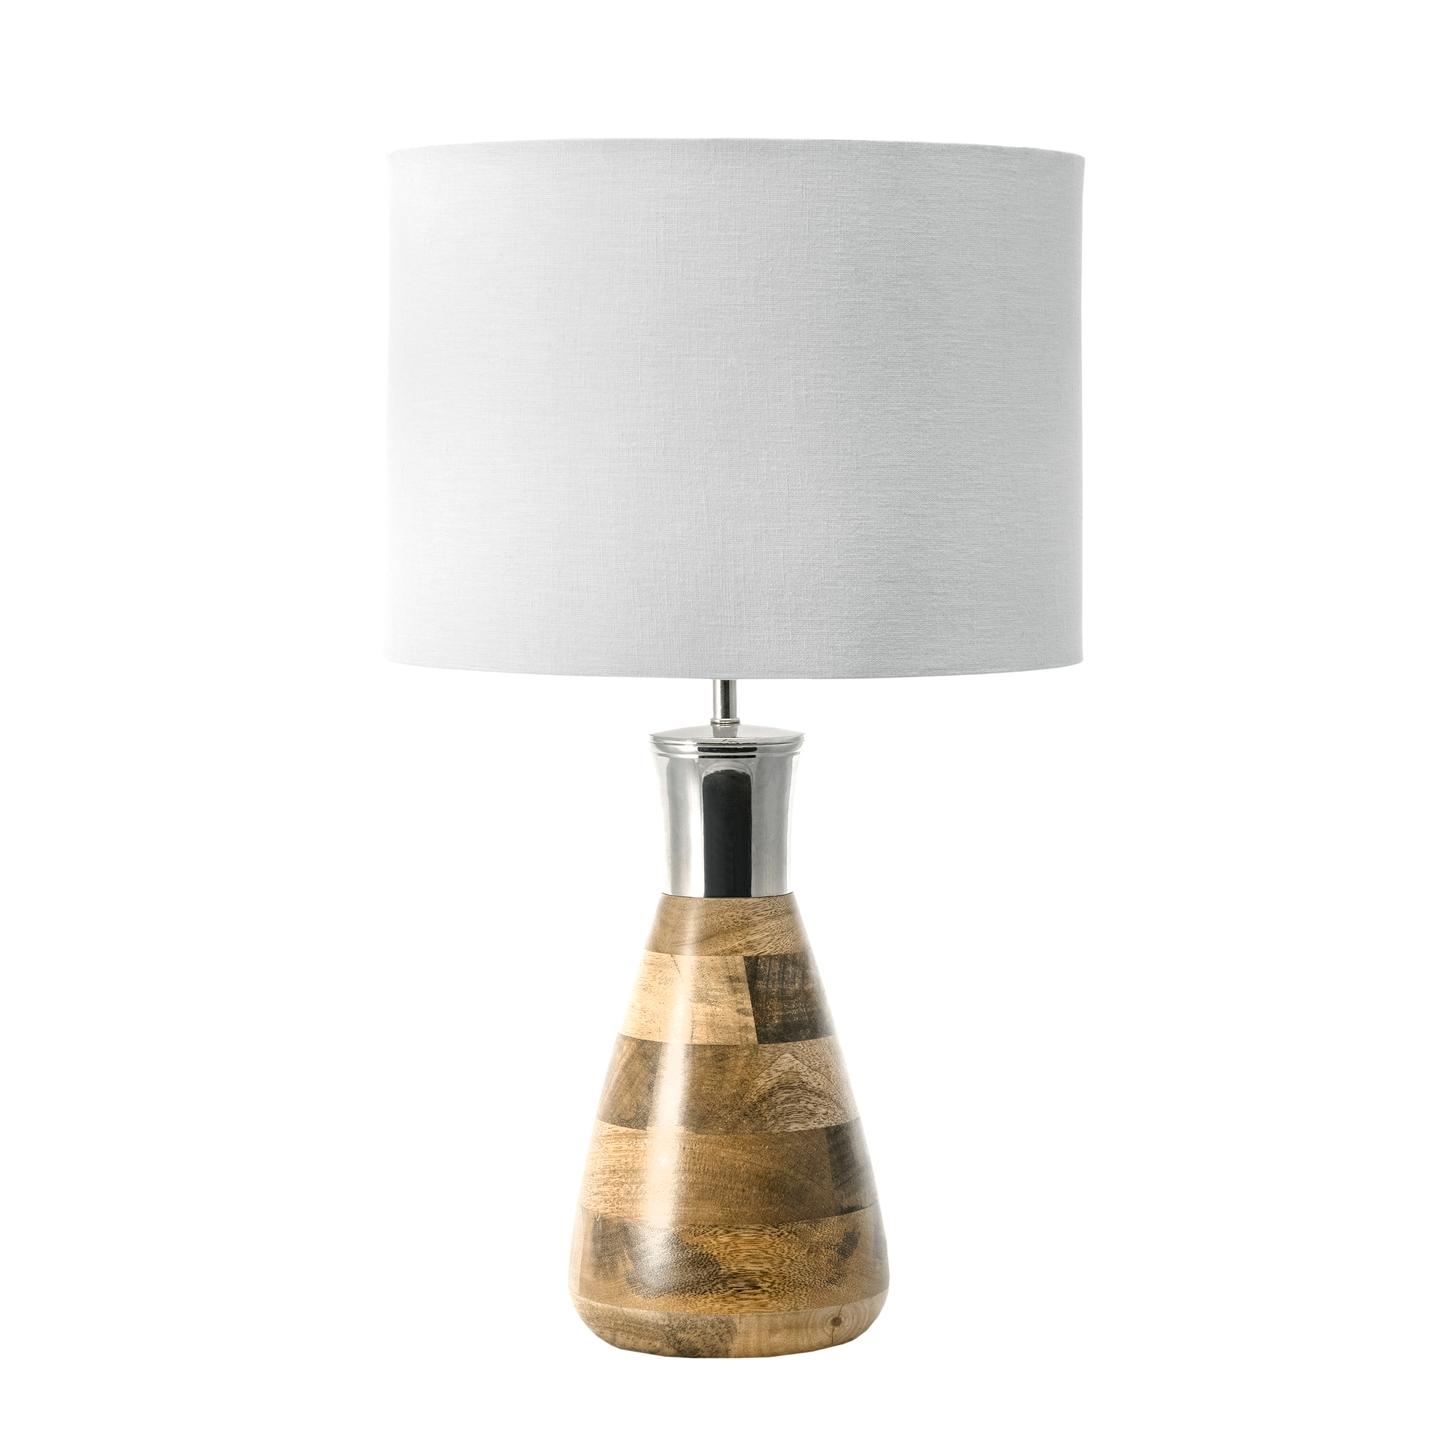 Douglas 22" Wood Table Lamp - Image 2